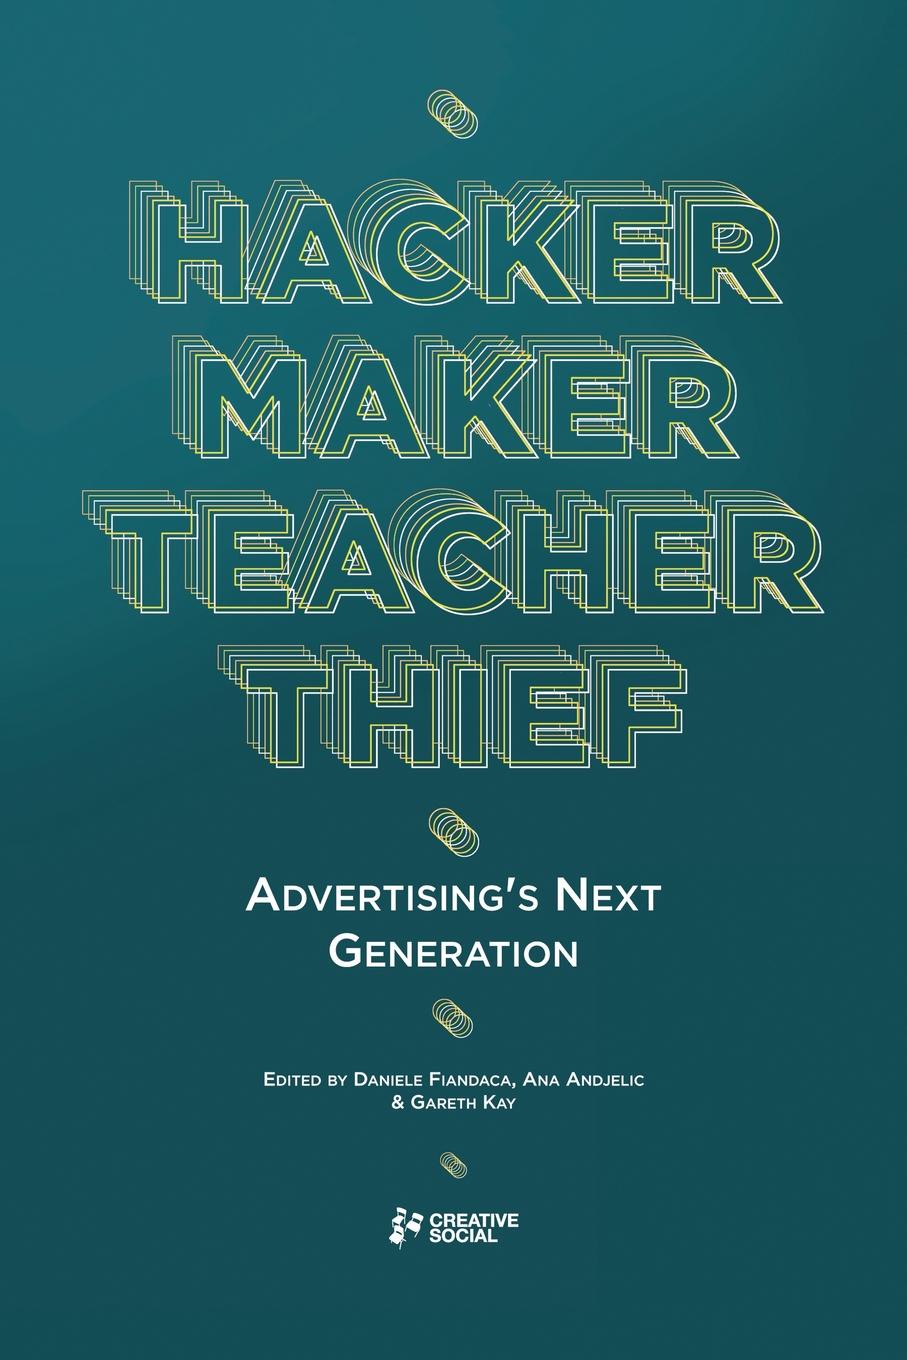 Ad next. Хакеры книга. @Teacher_maker.